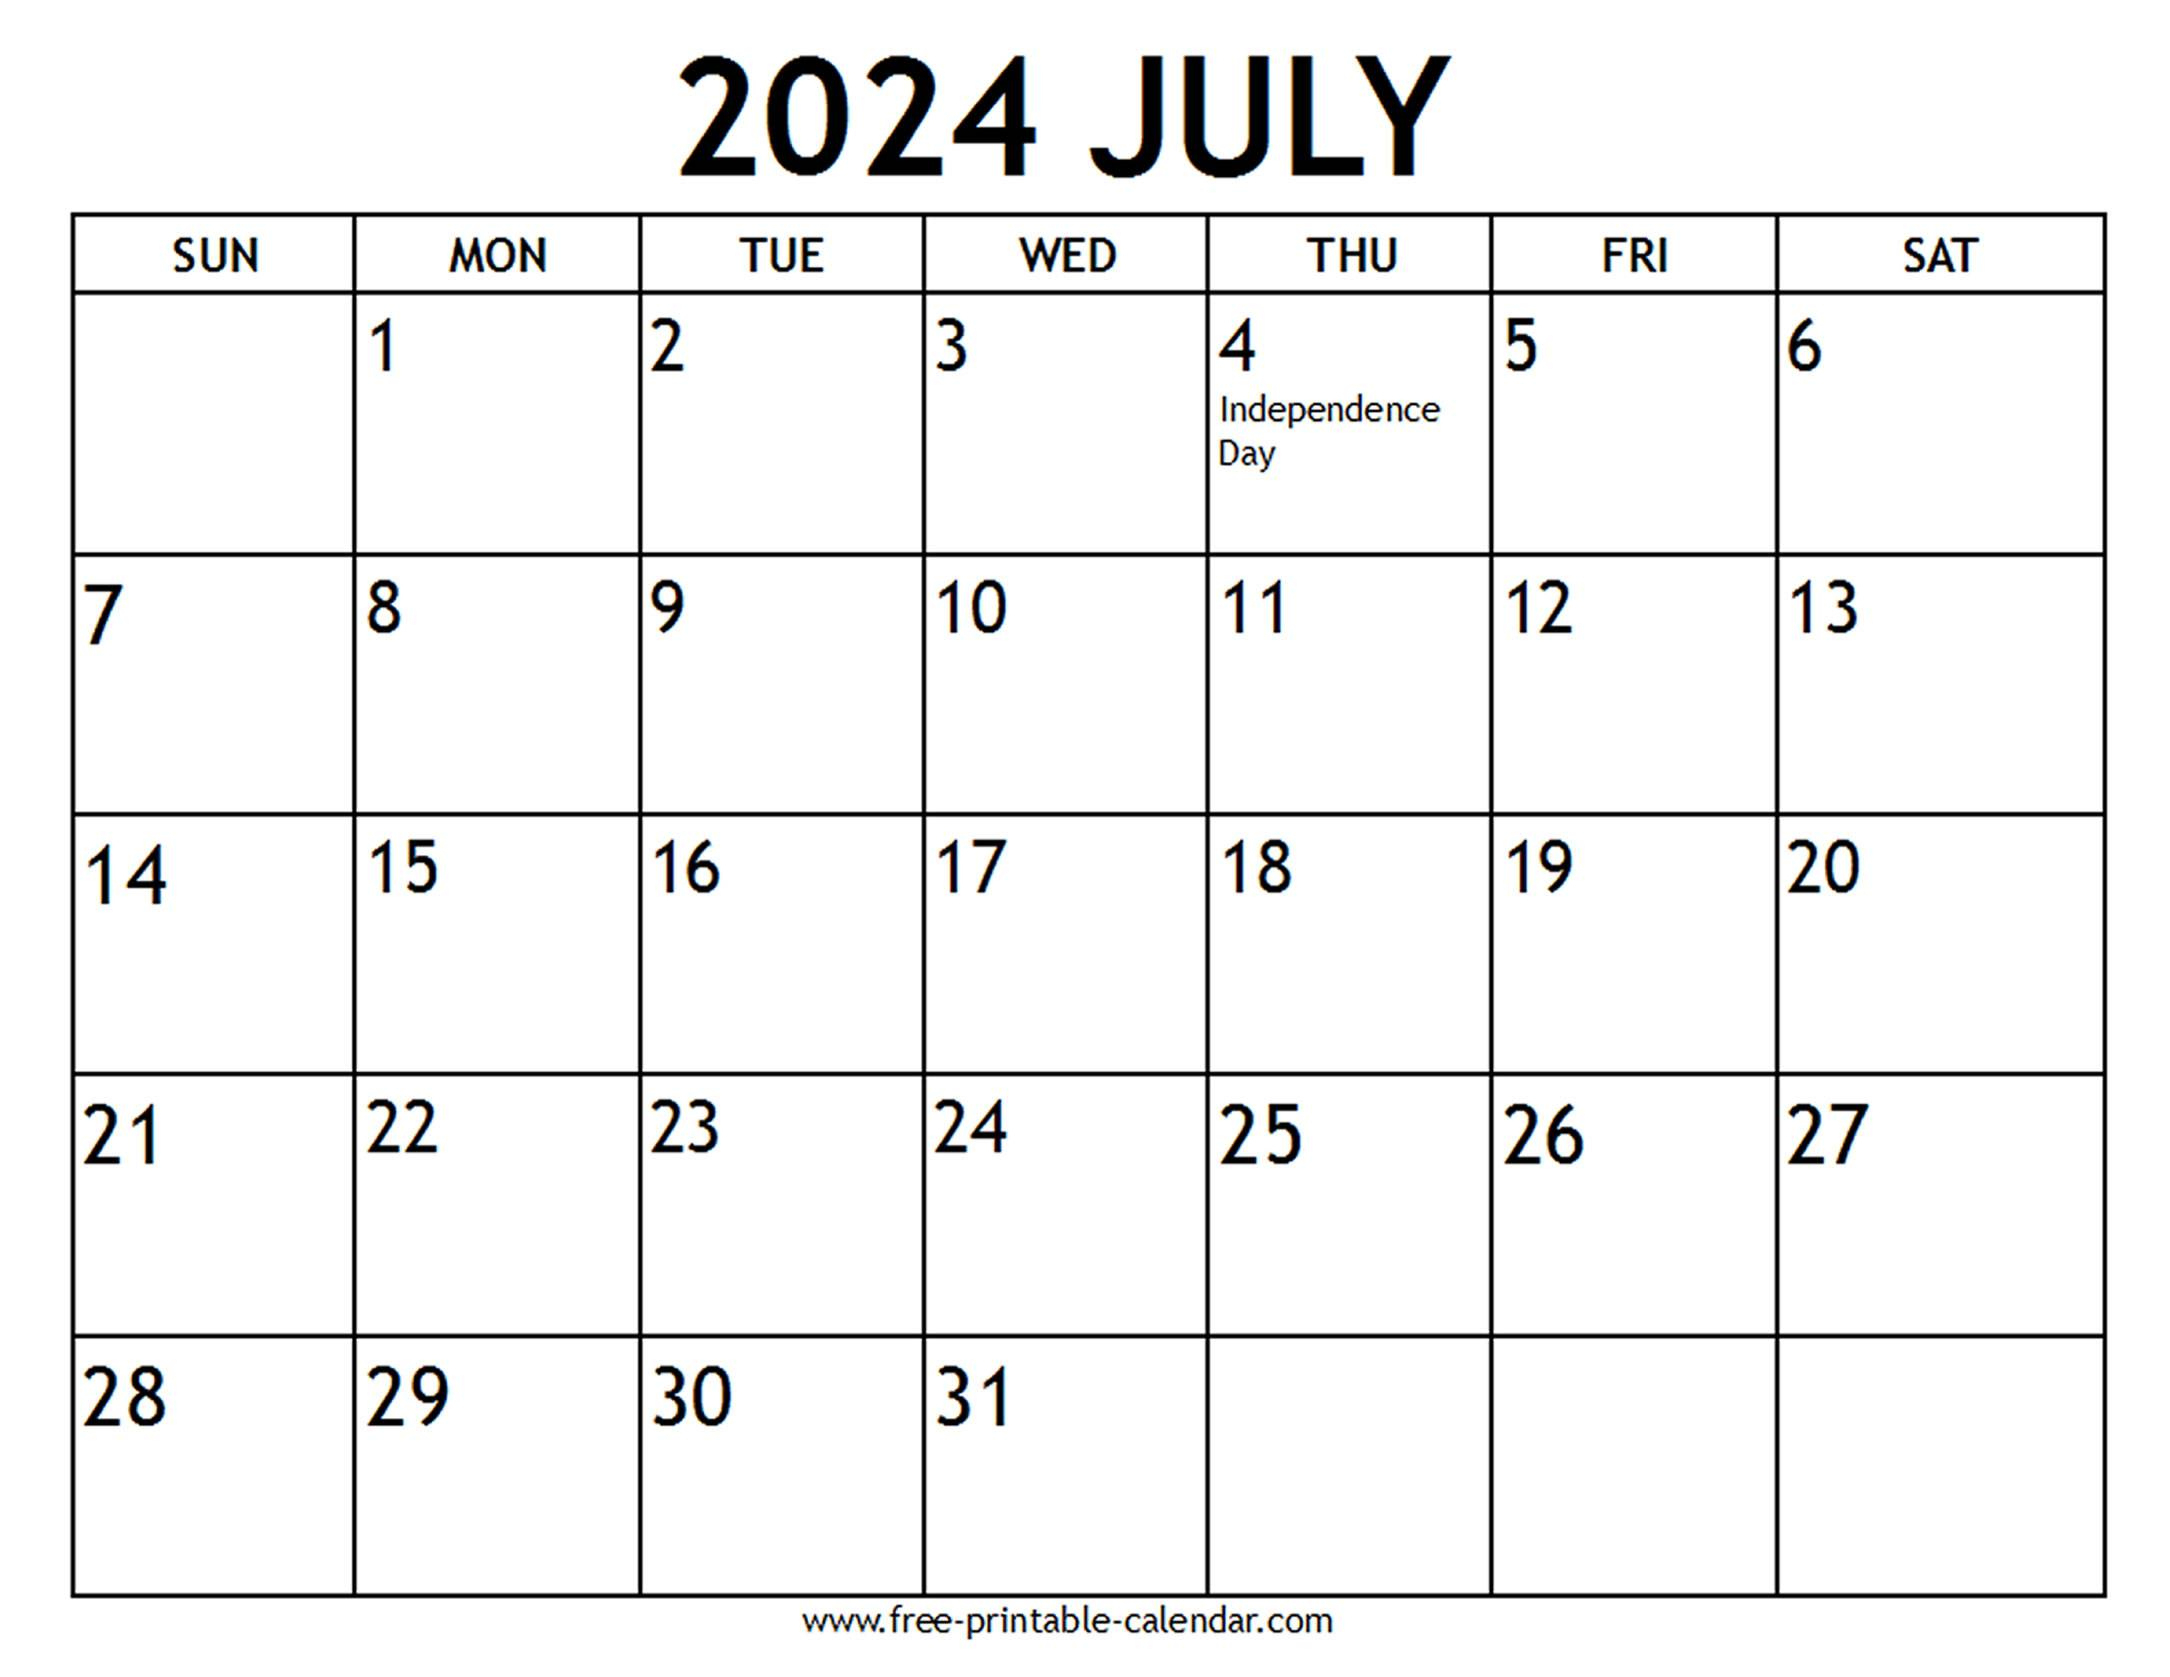 July 2024 Calendar Us Holidays - Free-Printable-Calendar | July 2024 Printable Calendar With Holidays